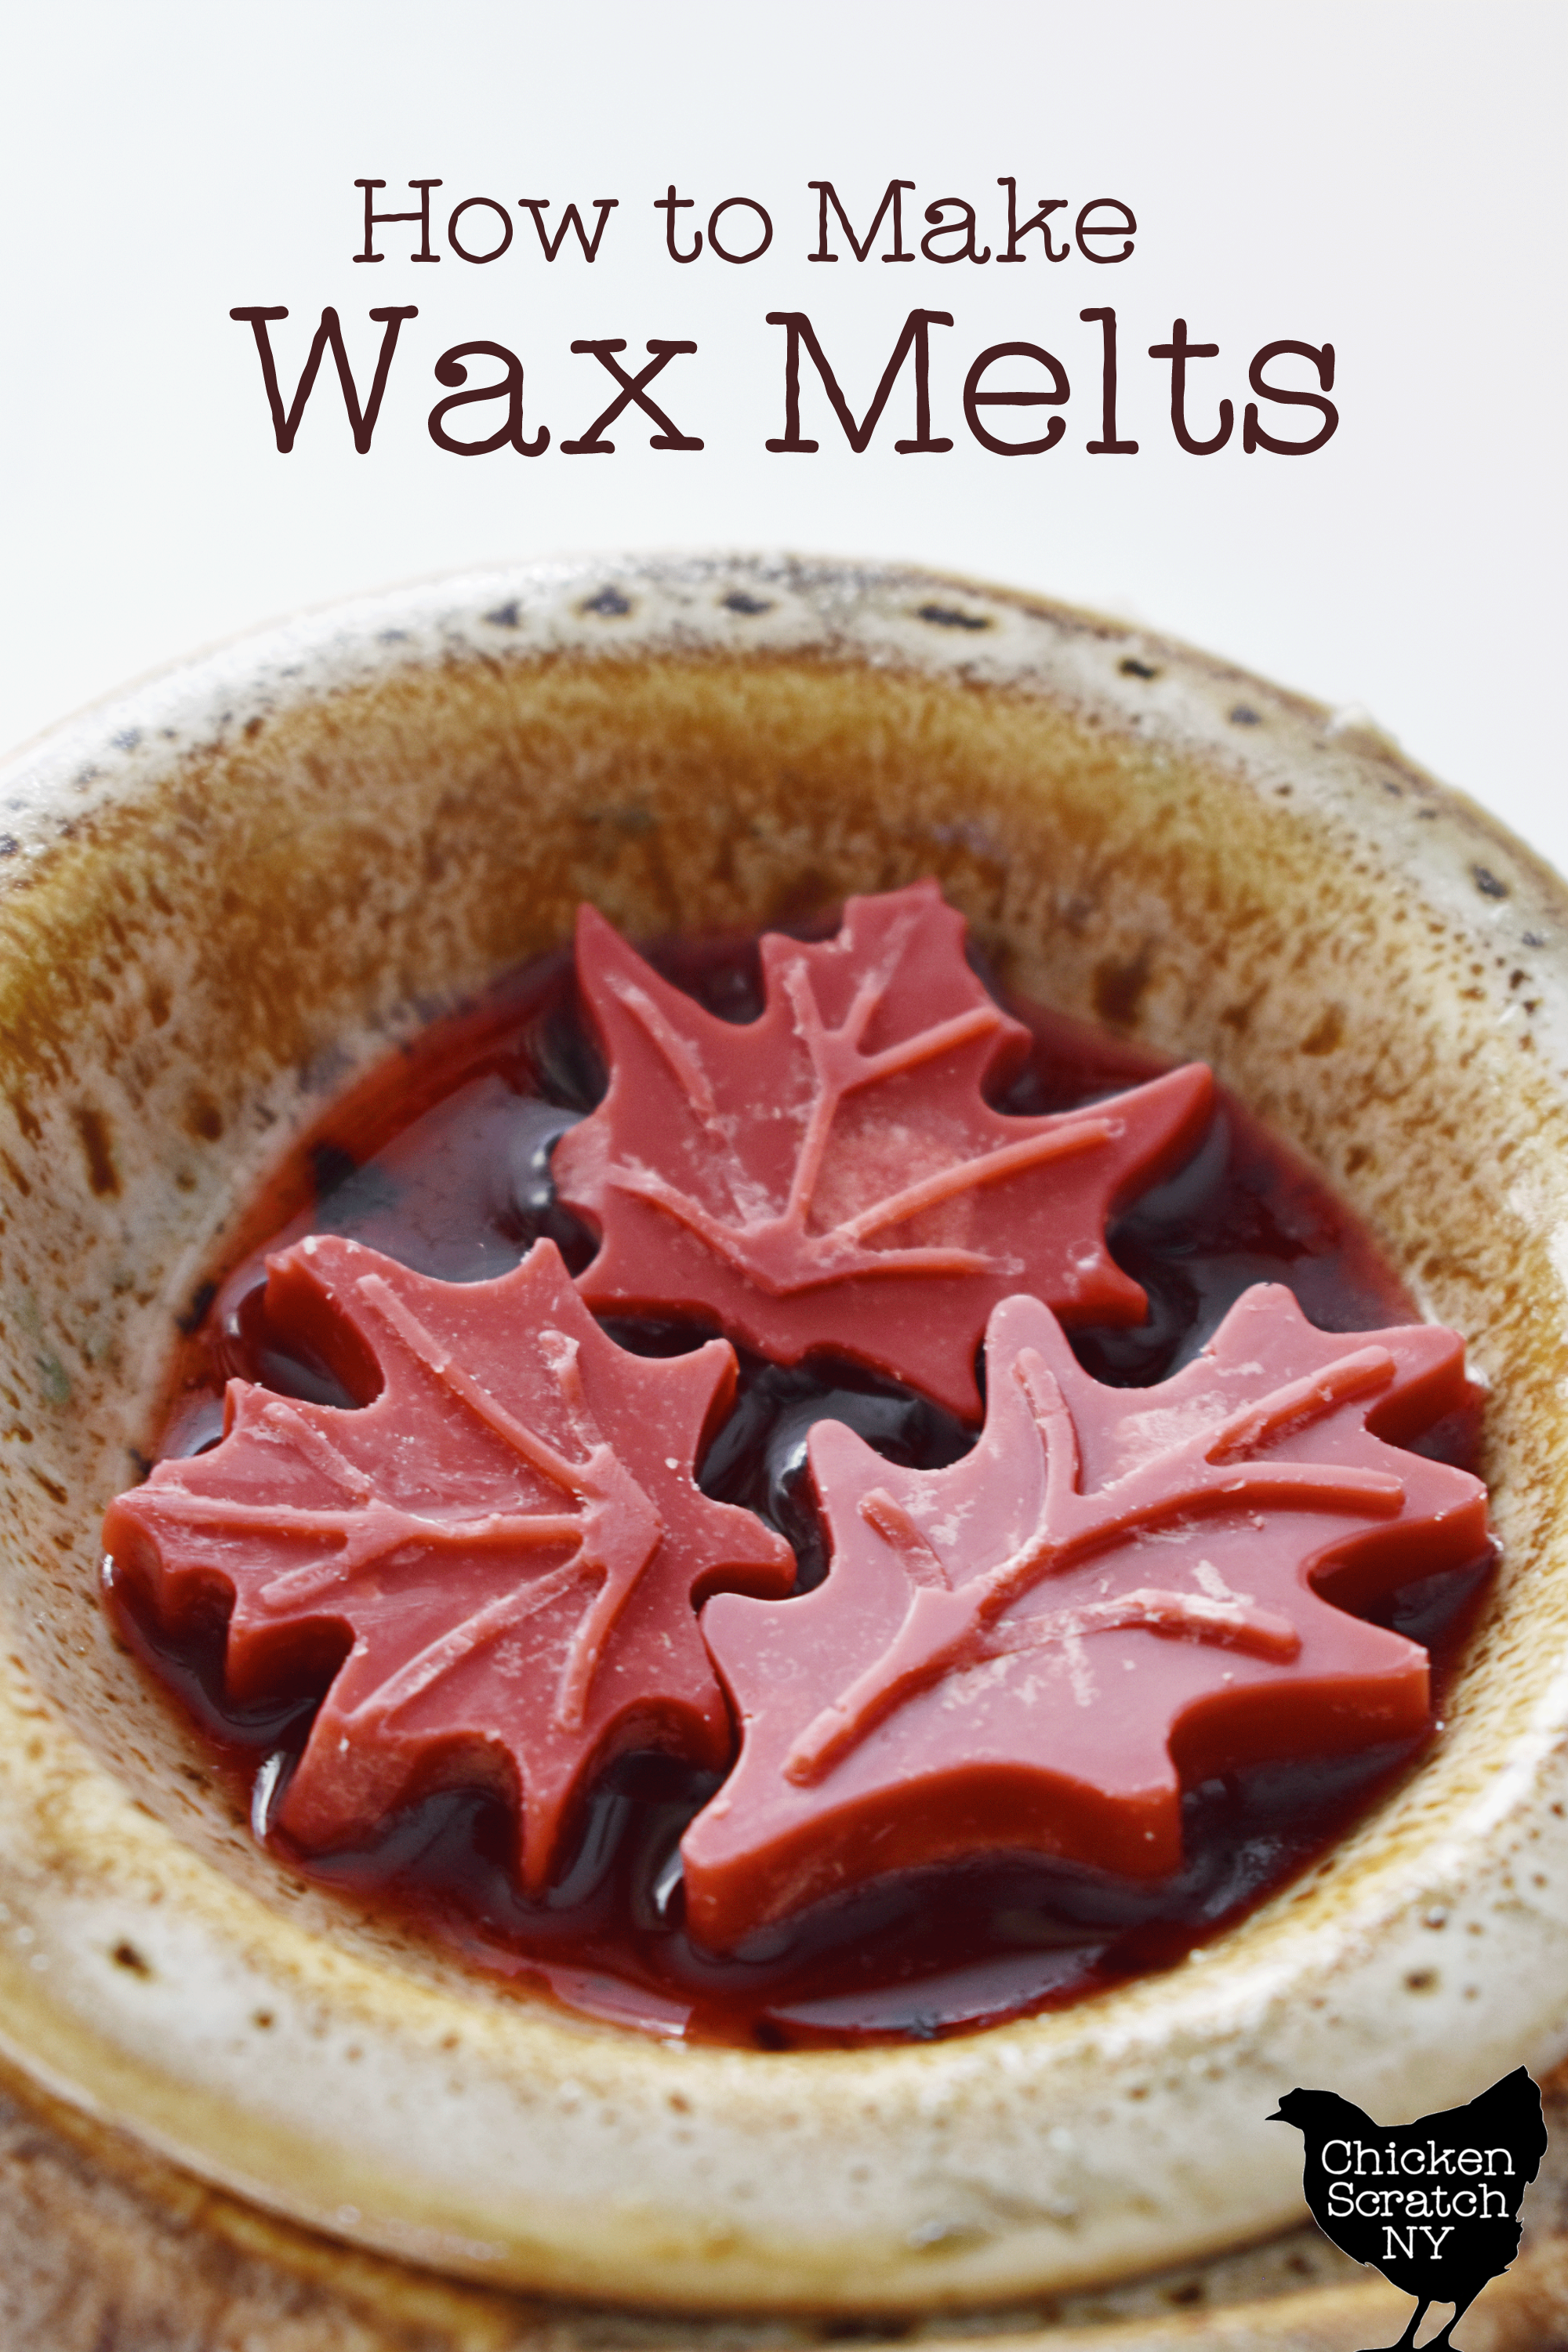 TUTORIAL: Make Clamshell Wax Melts - CandleScience